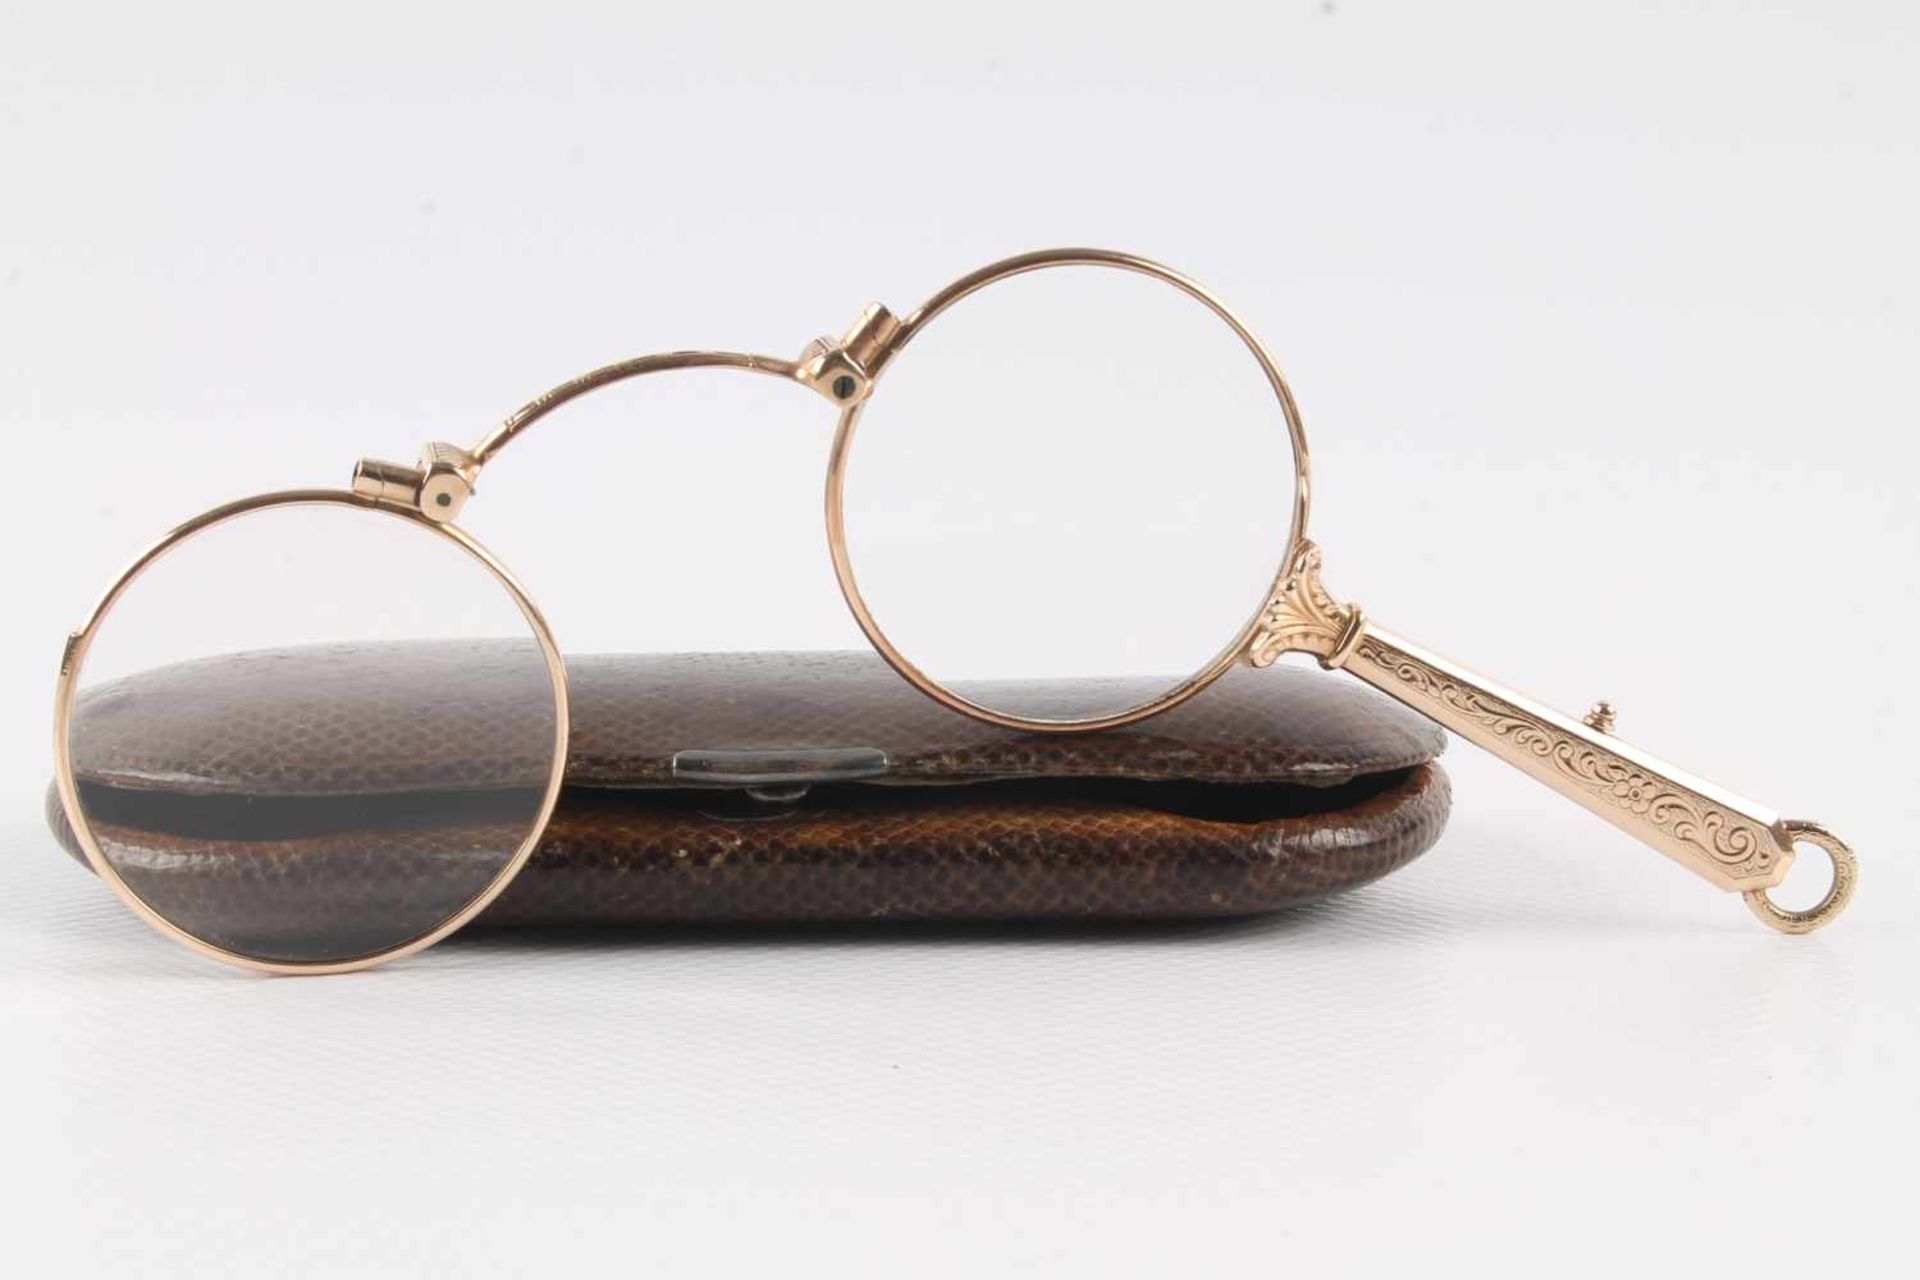 Jugendstil Lorgnette 585 Gold, Stielbrille in 14K Gold, geprüft jedoch ungemakt, Maße offen H 7,5 cm